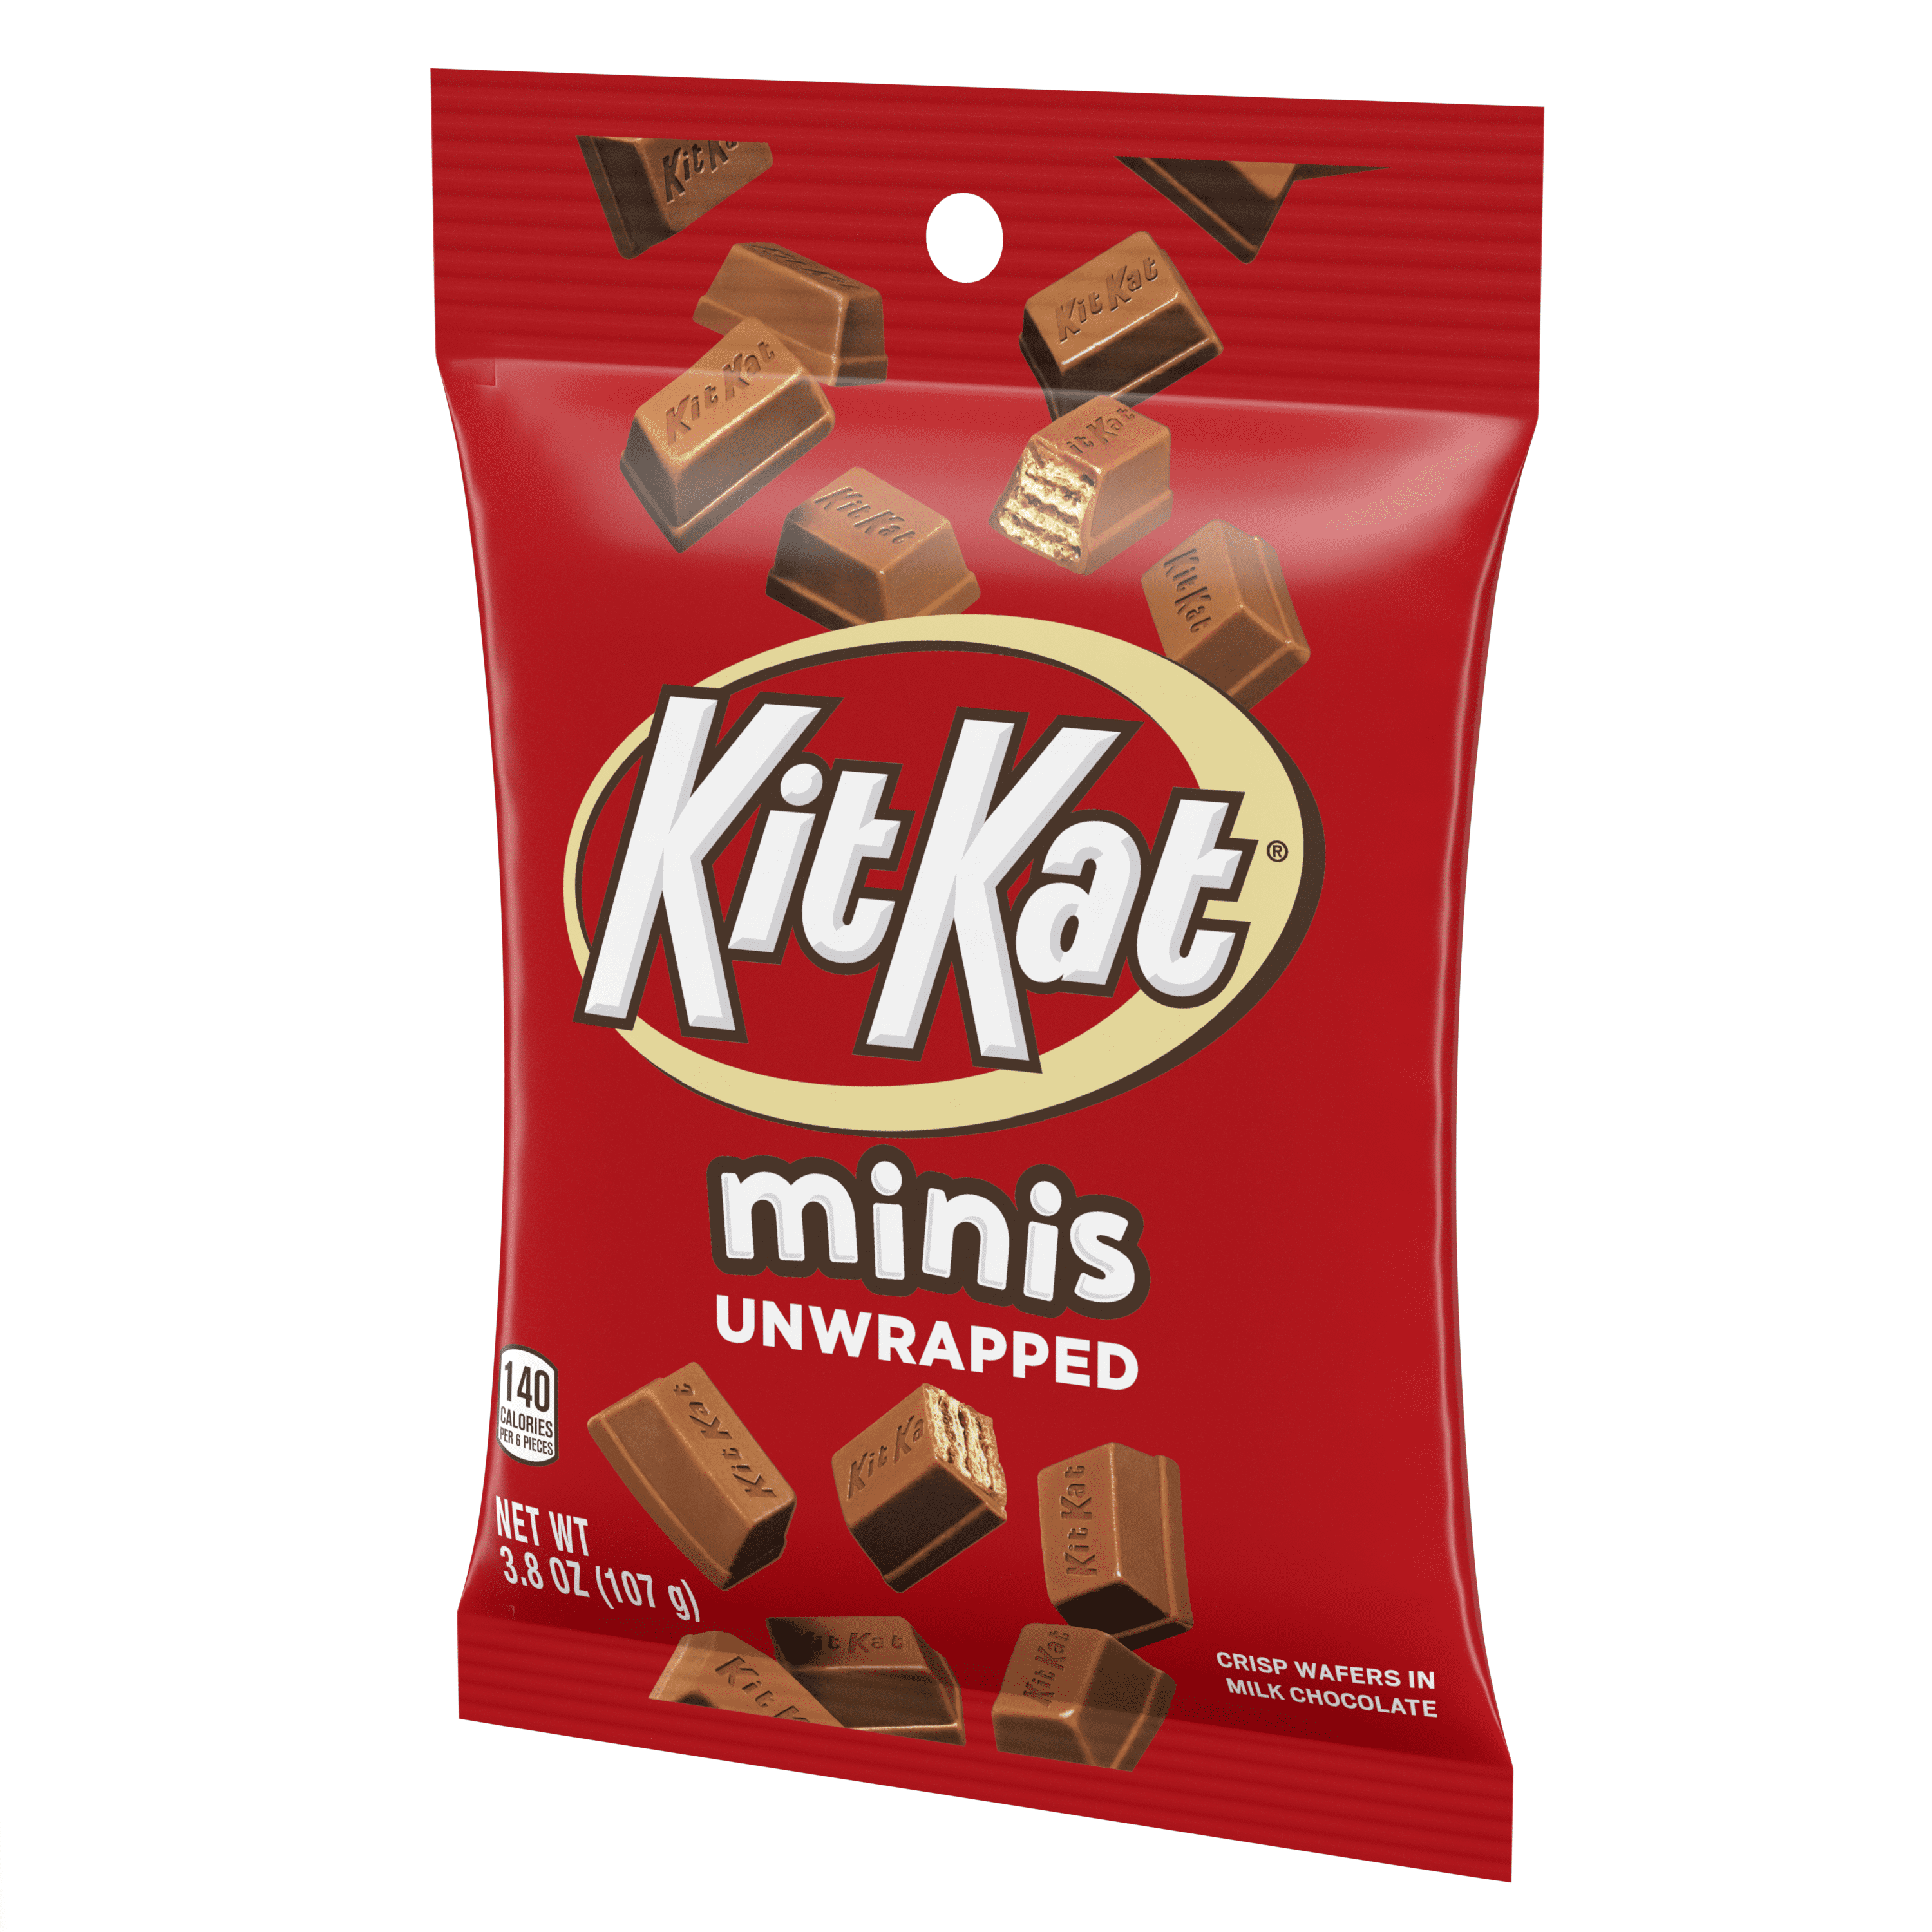 KITKAT KIT KAT® Minis, Unwrapped Milk Chocolate Wafer Candy Bars, Movie Snack, 3.8 oz, Bag